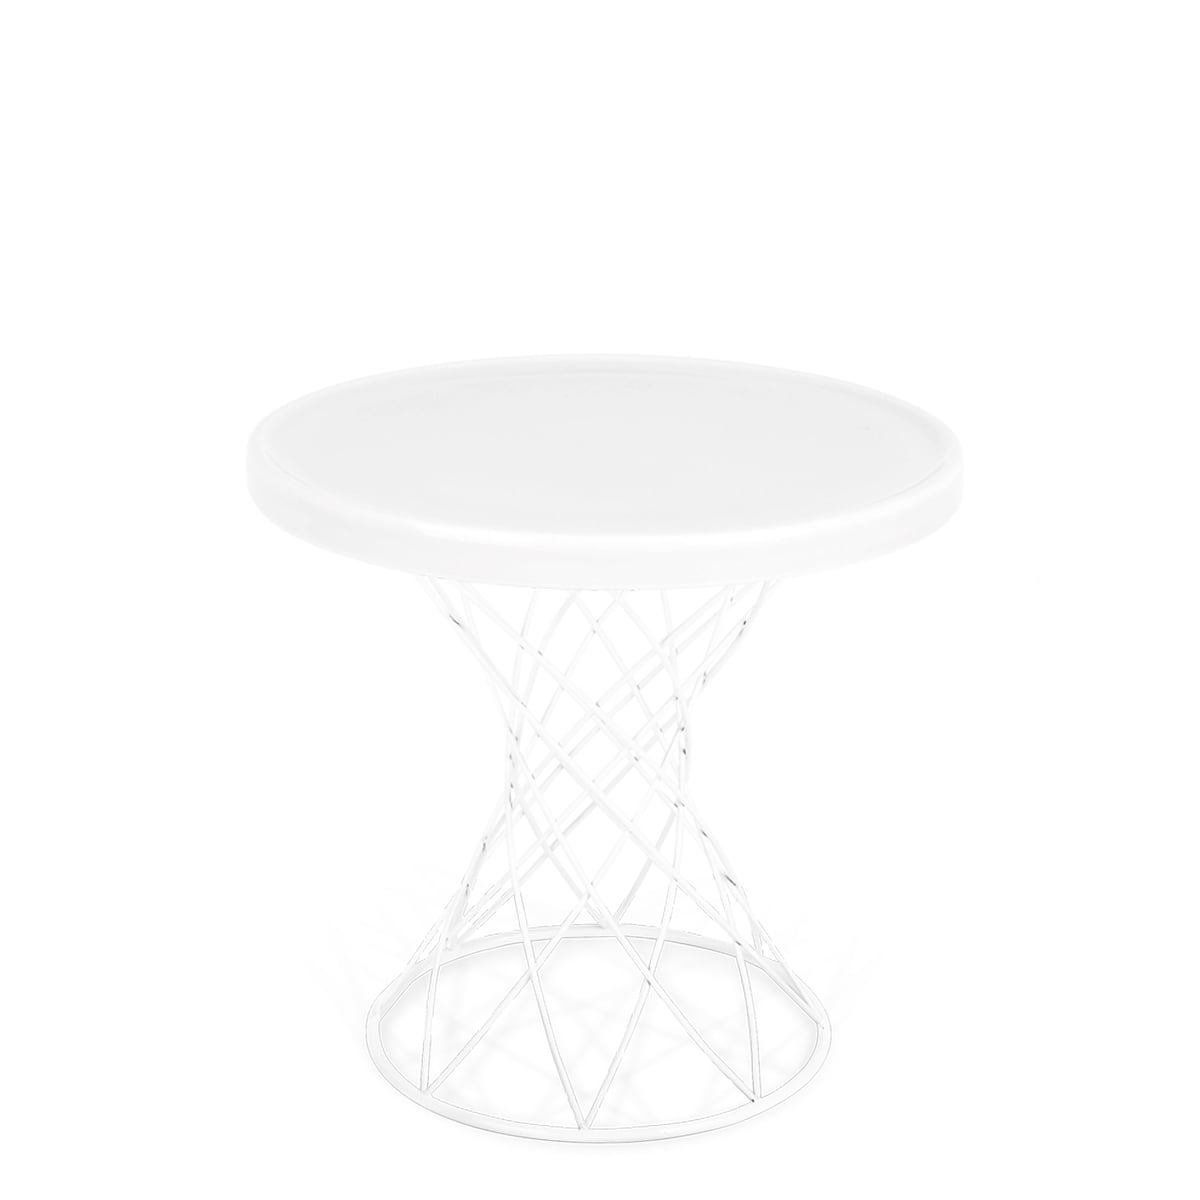 Ox Denmarq - Merge Table d'appoint, Ø 40 x H 40 cm, blanc / blanc porcelaine